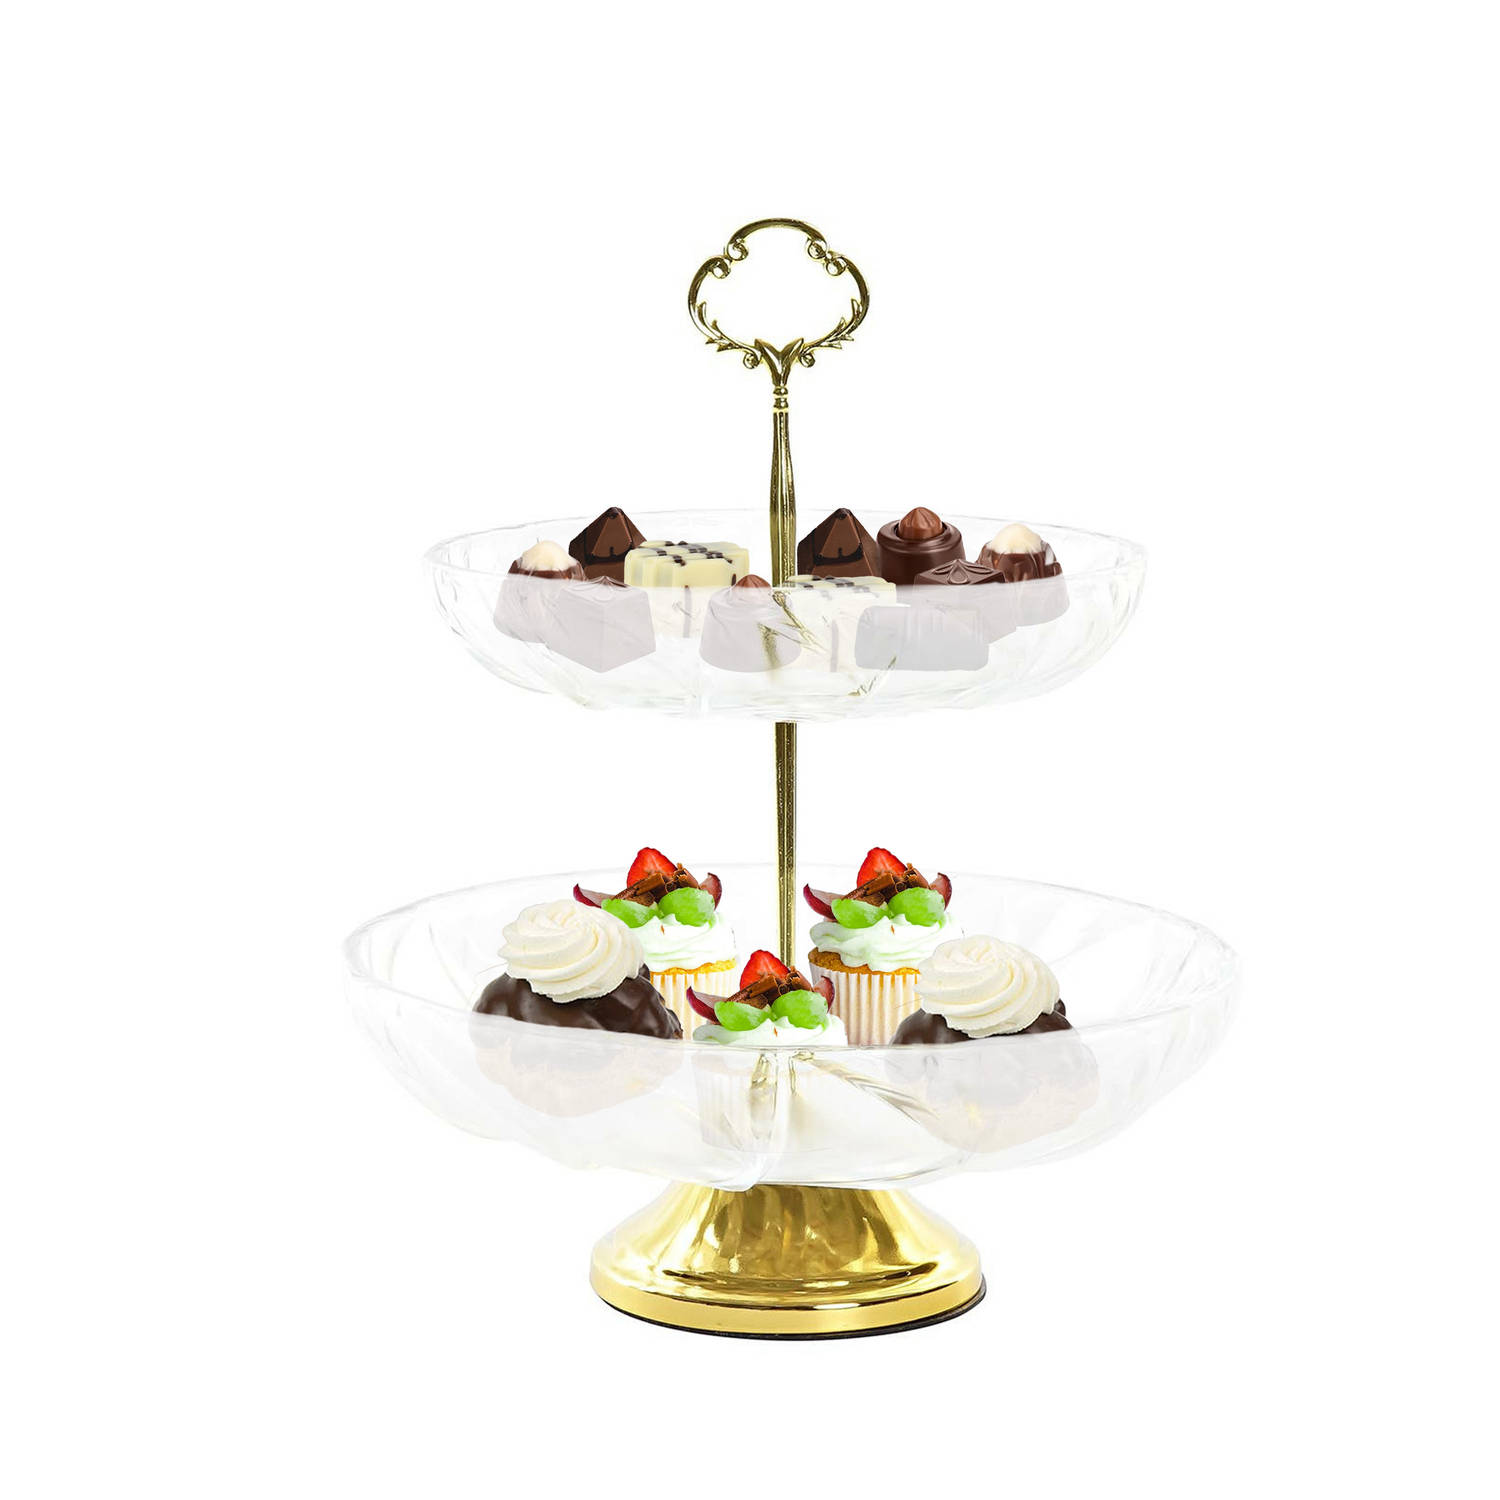 Items Design 2 laags high tea etagere goud-transparant metaal-glas 25 x 29 cm Etageres